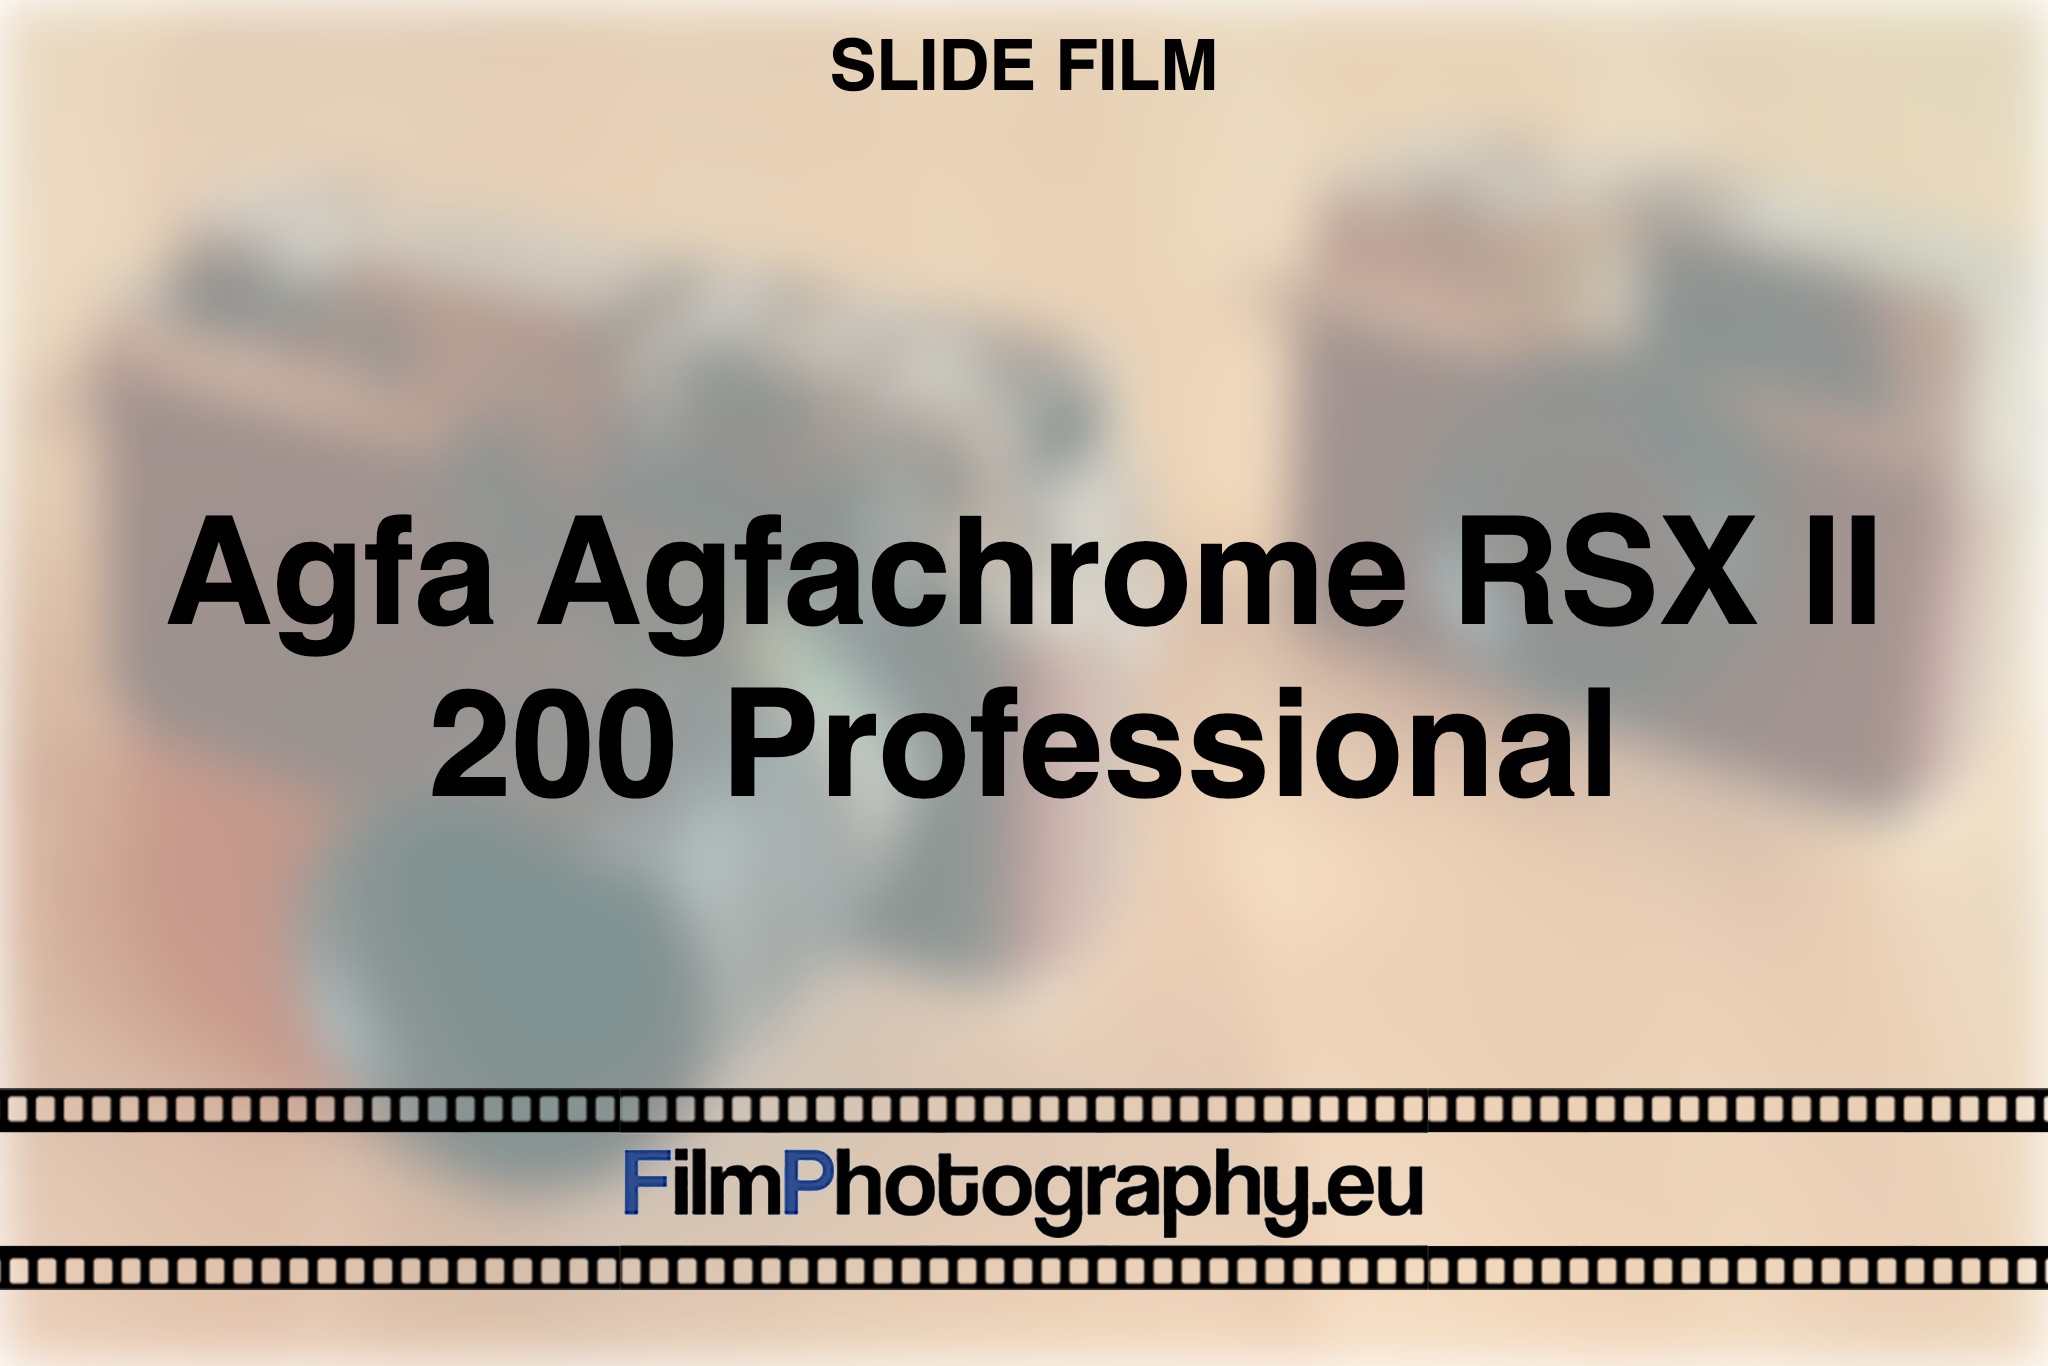 agfa-agfachrome-rsx-ii-200-professional-slide-film-bnv